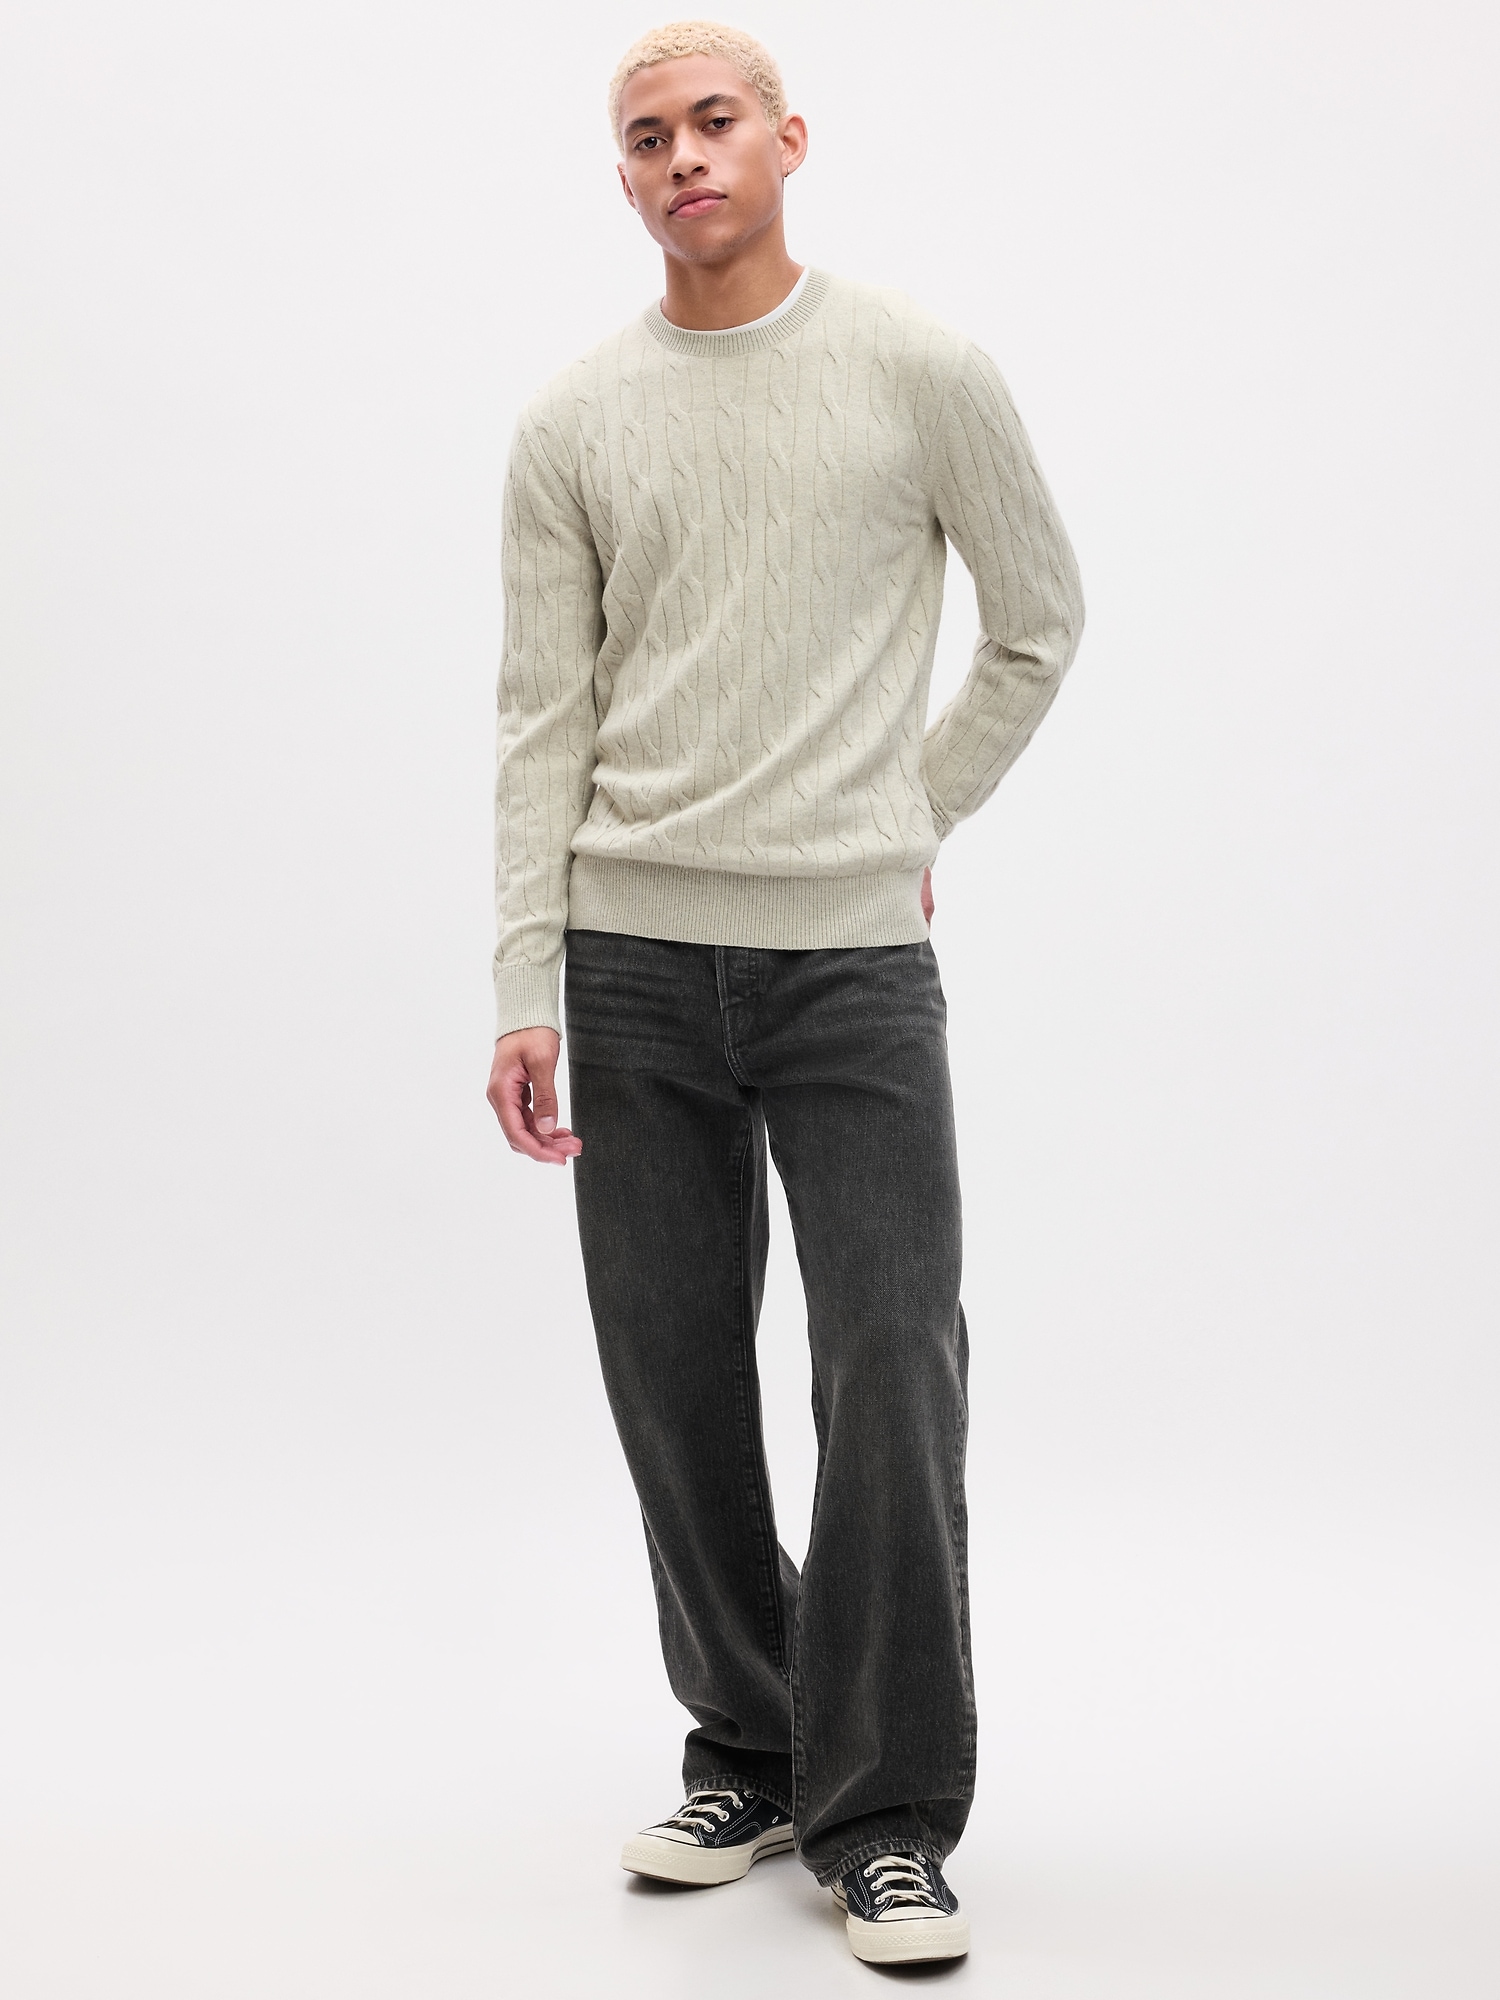 CashSoft Cable-Knit Sweater